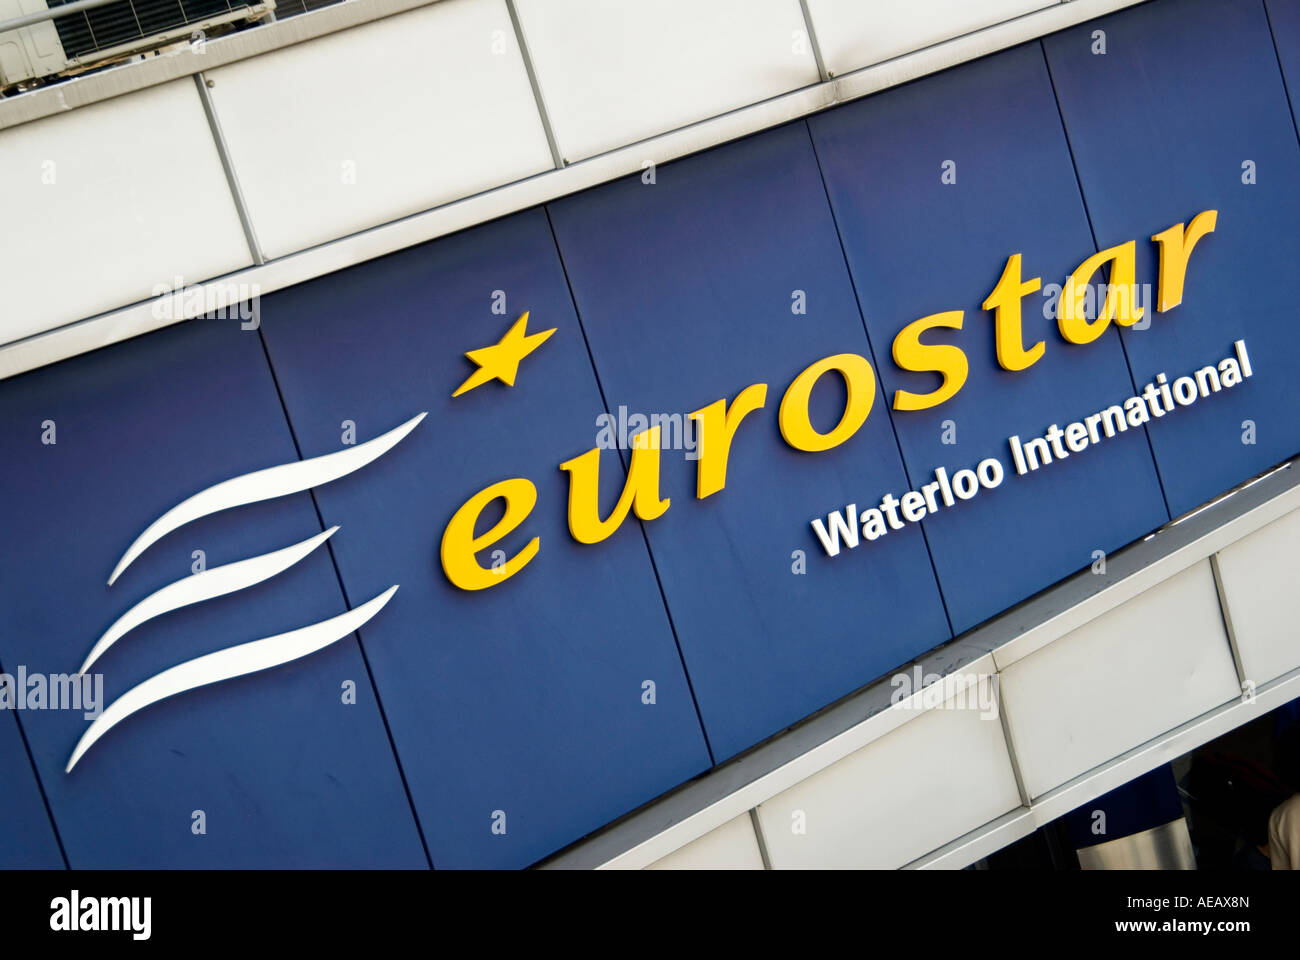 Eurostar company sign at London Waterloo train station UK Stock Photo